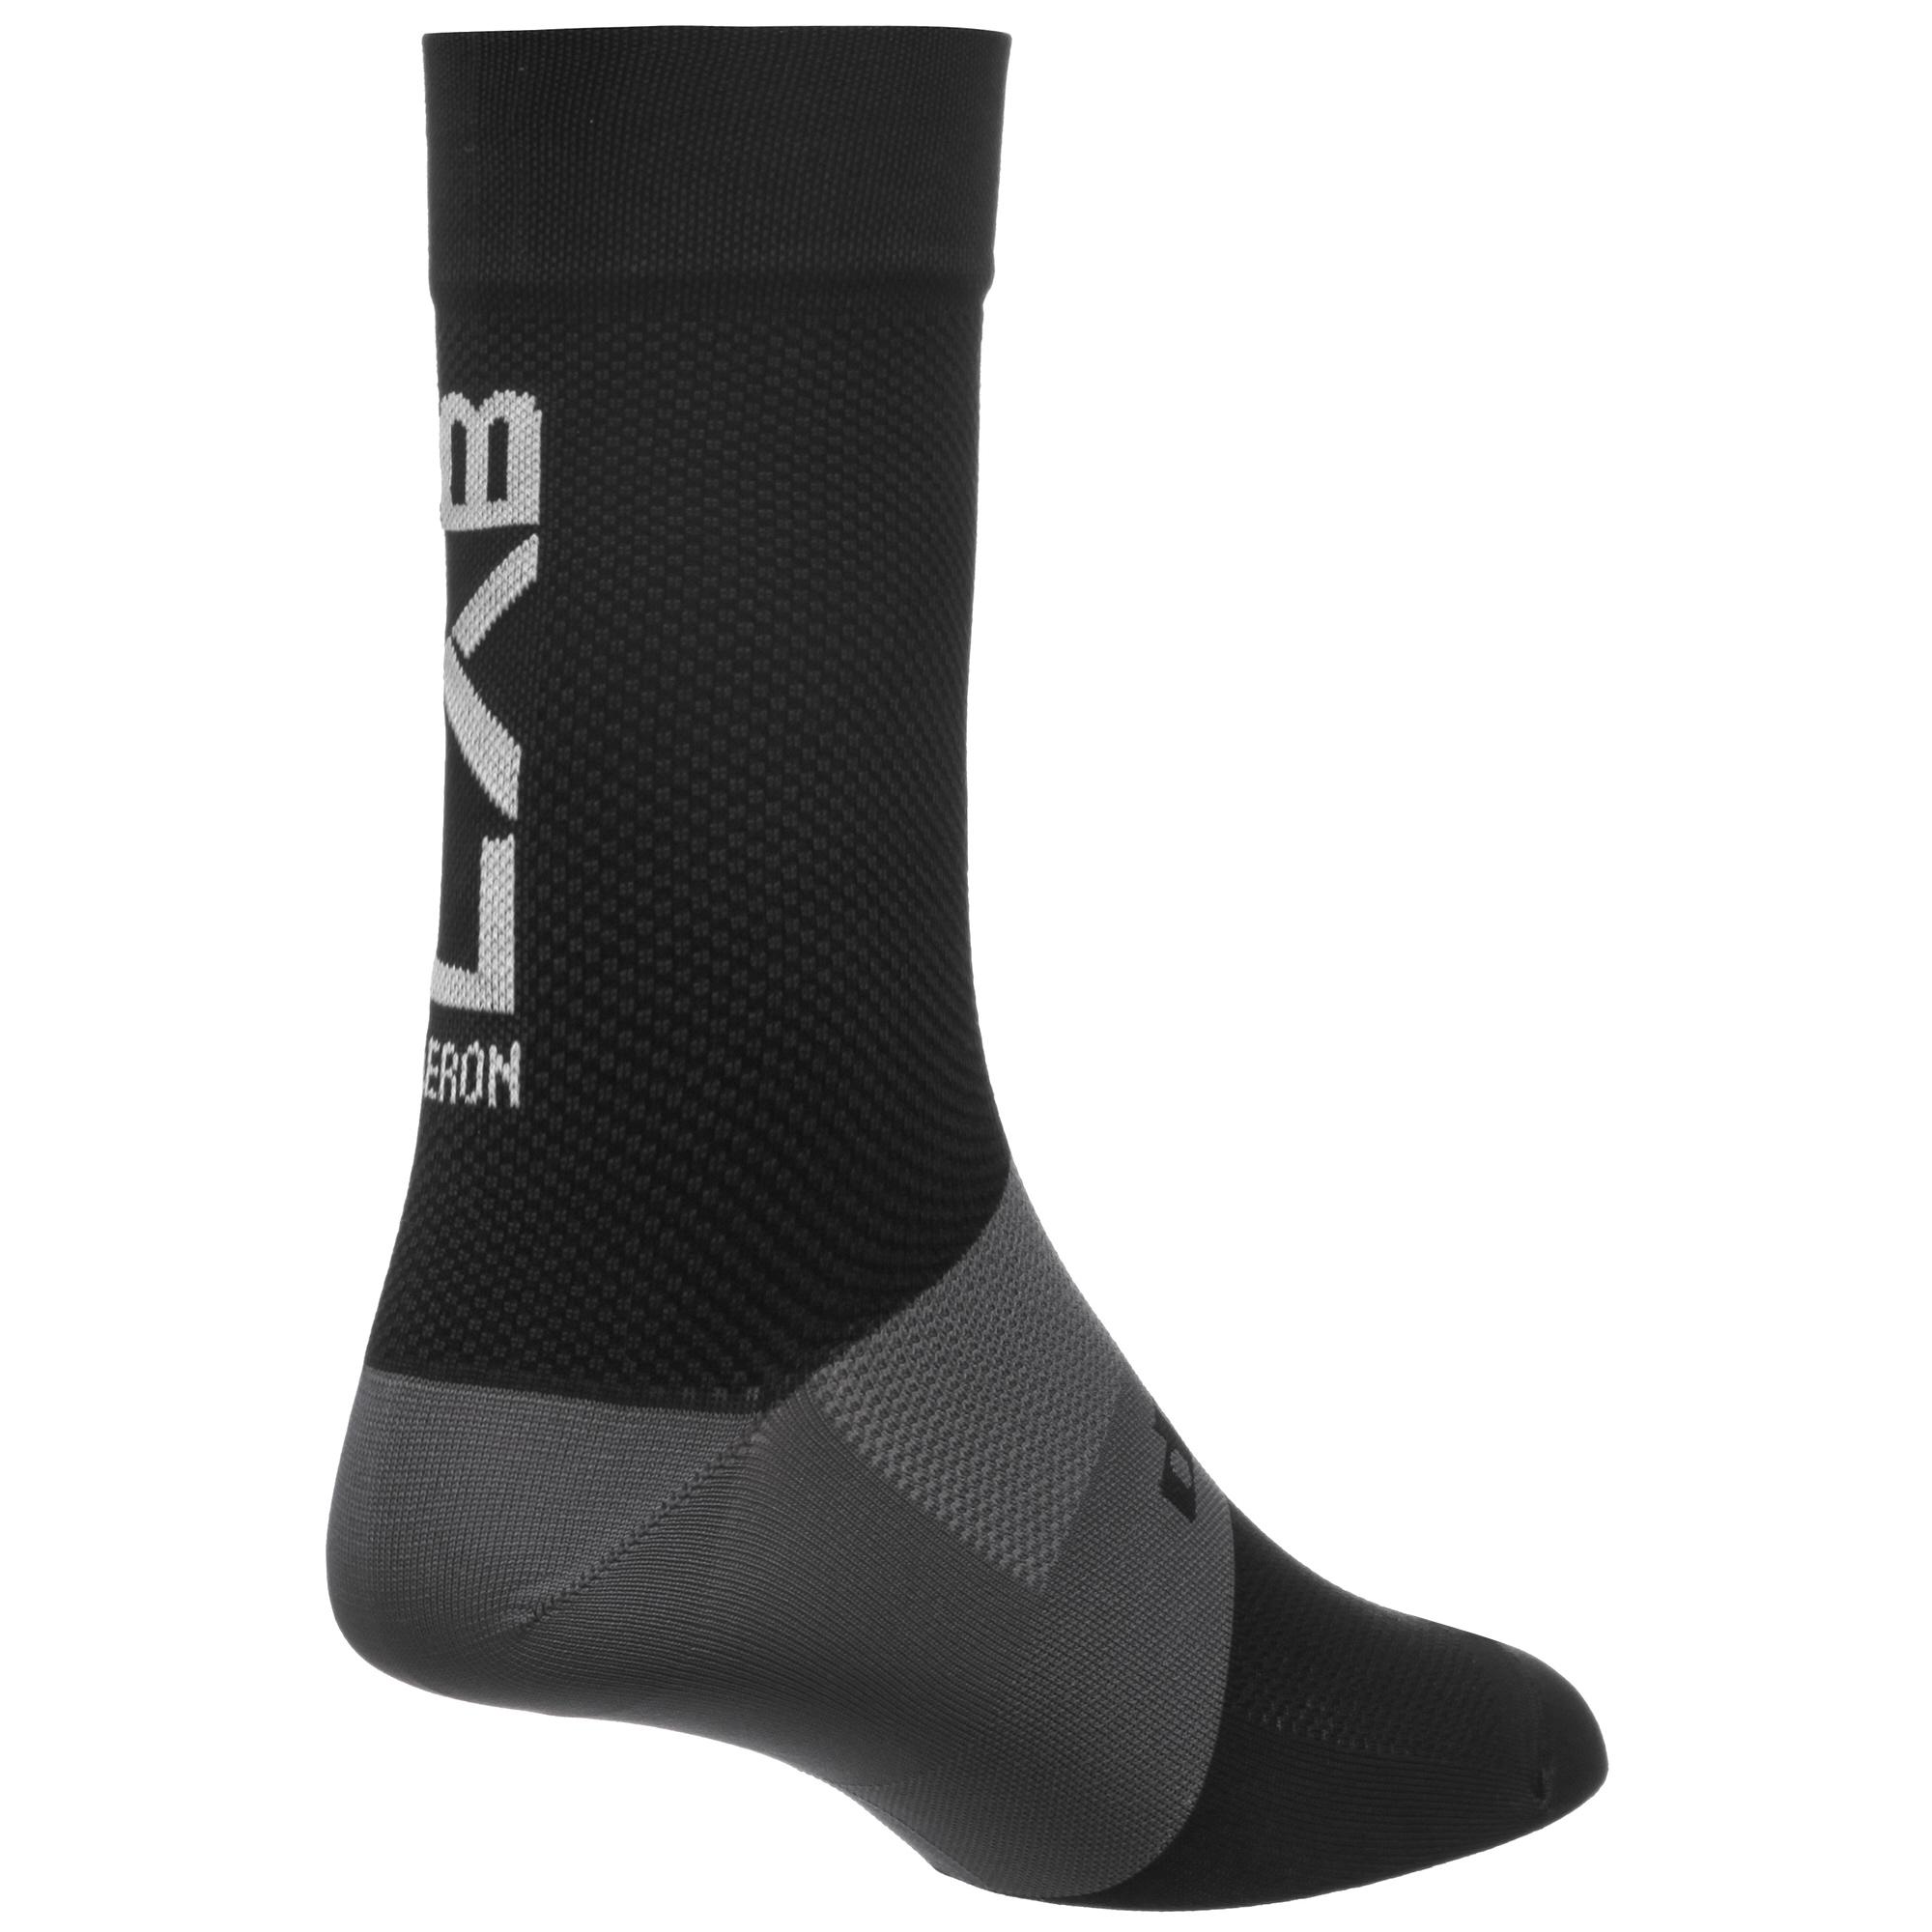 Dhb Aeron Lab Sock  Black/grey